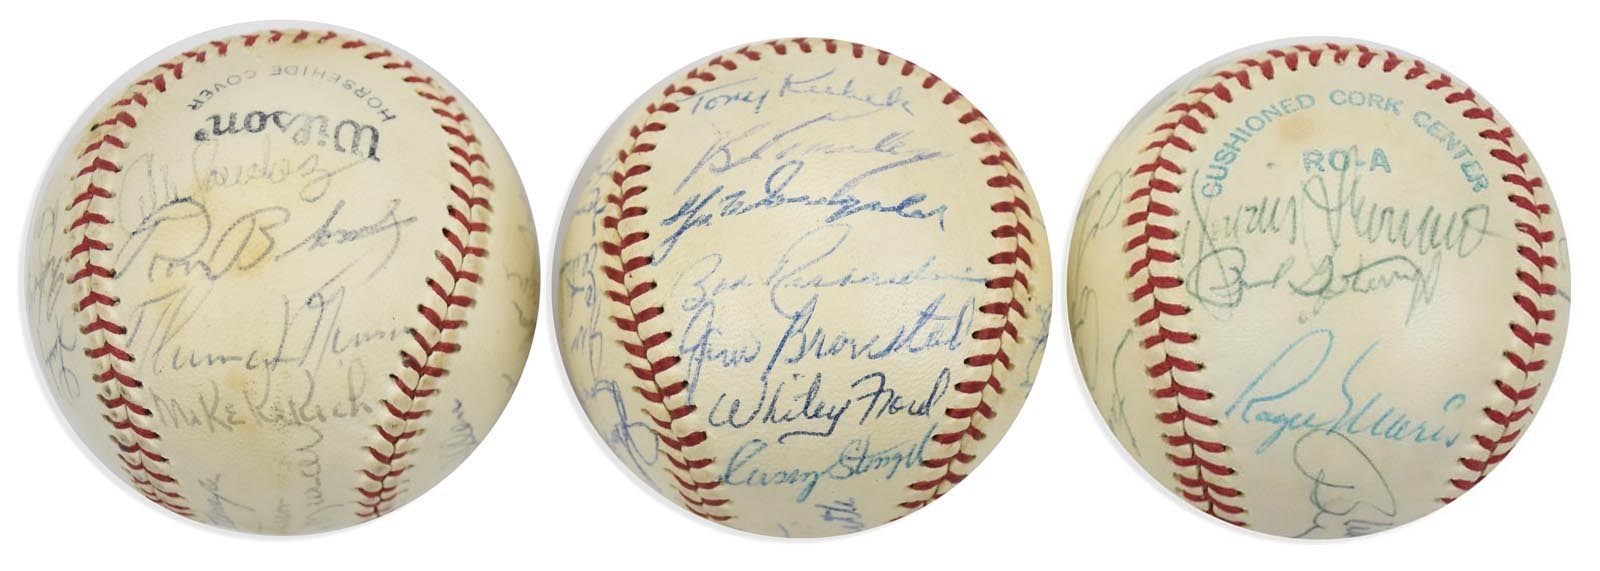 NY Yankees, Giants & Mets - 1950s-70s New York Yankees Team Signed Baseballs w/Munson & Maris (3)